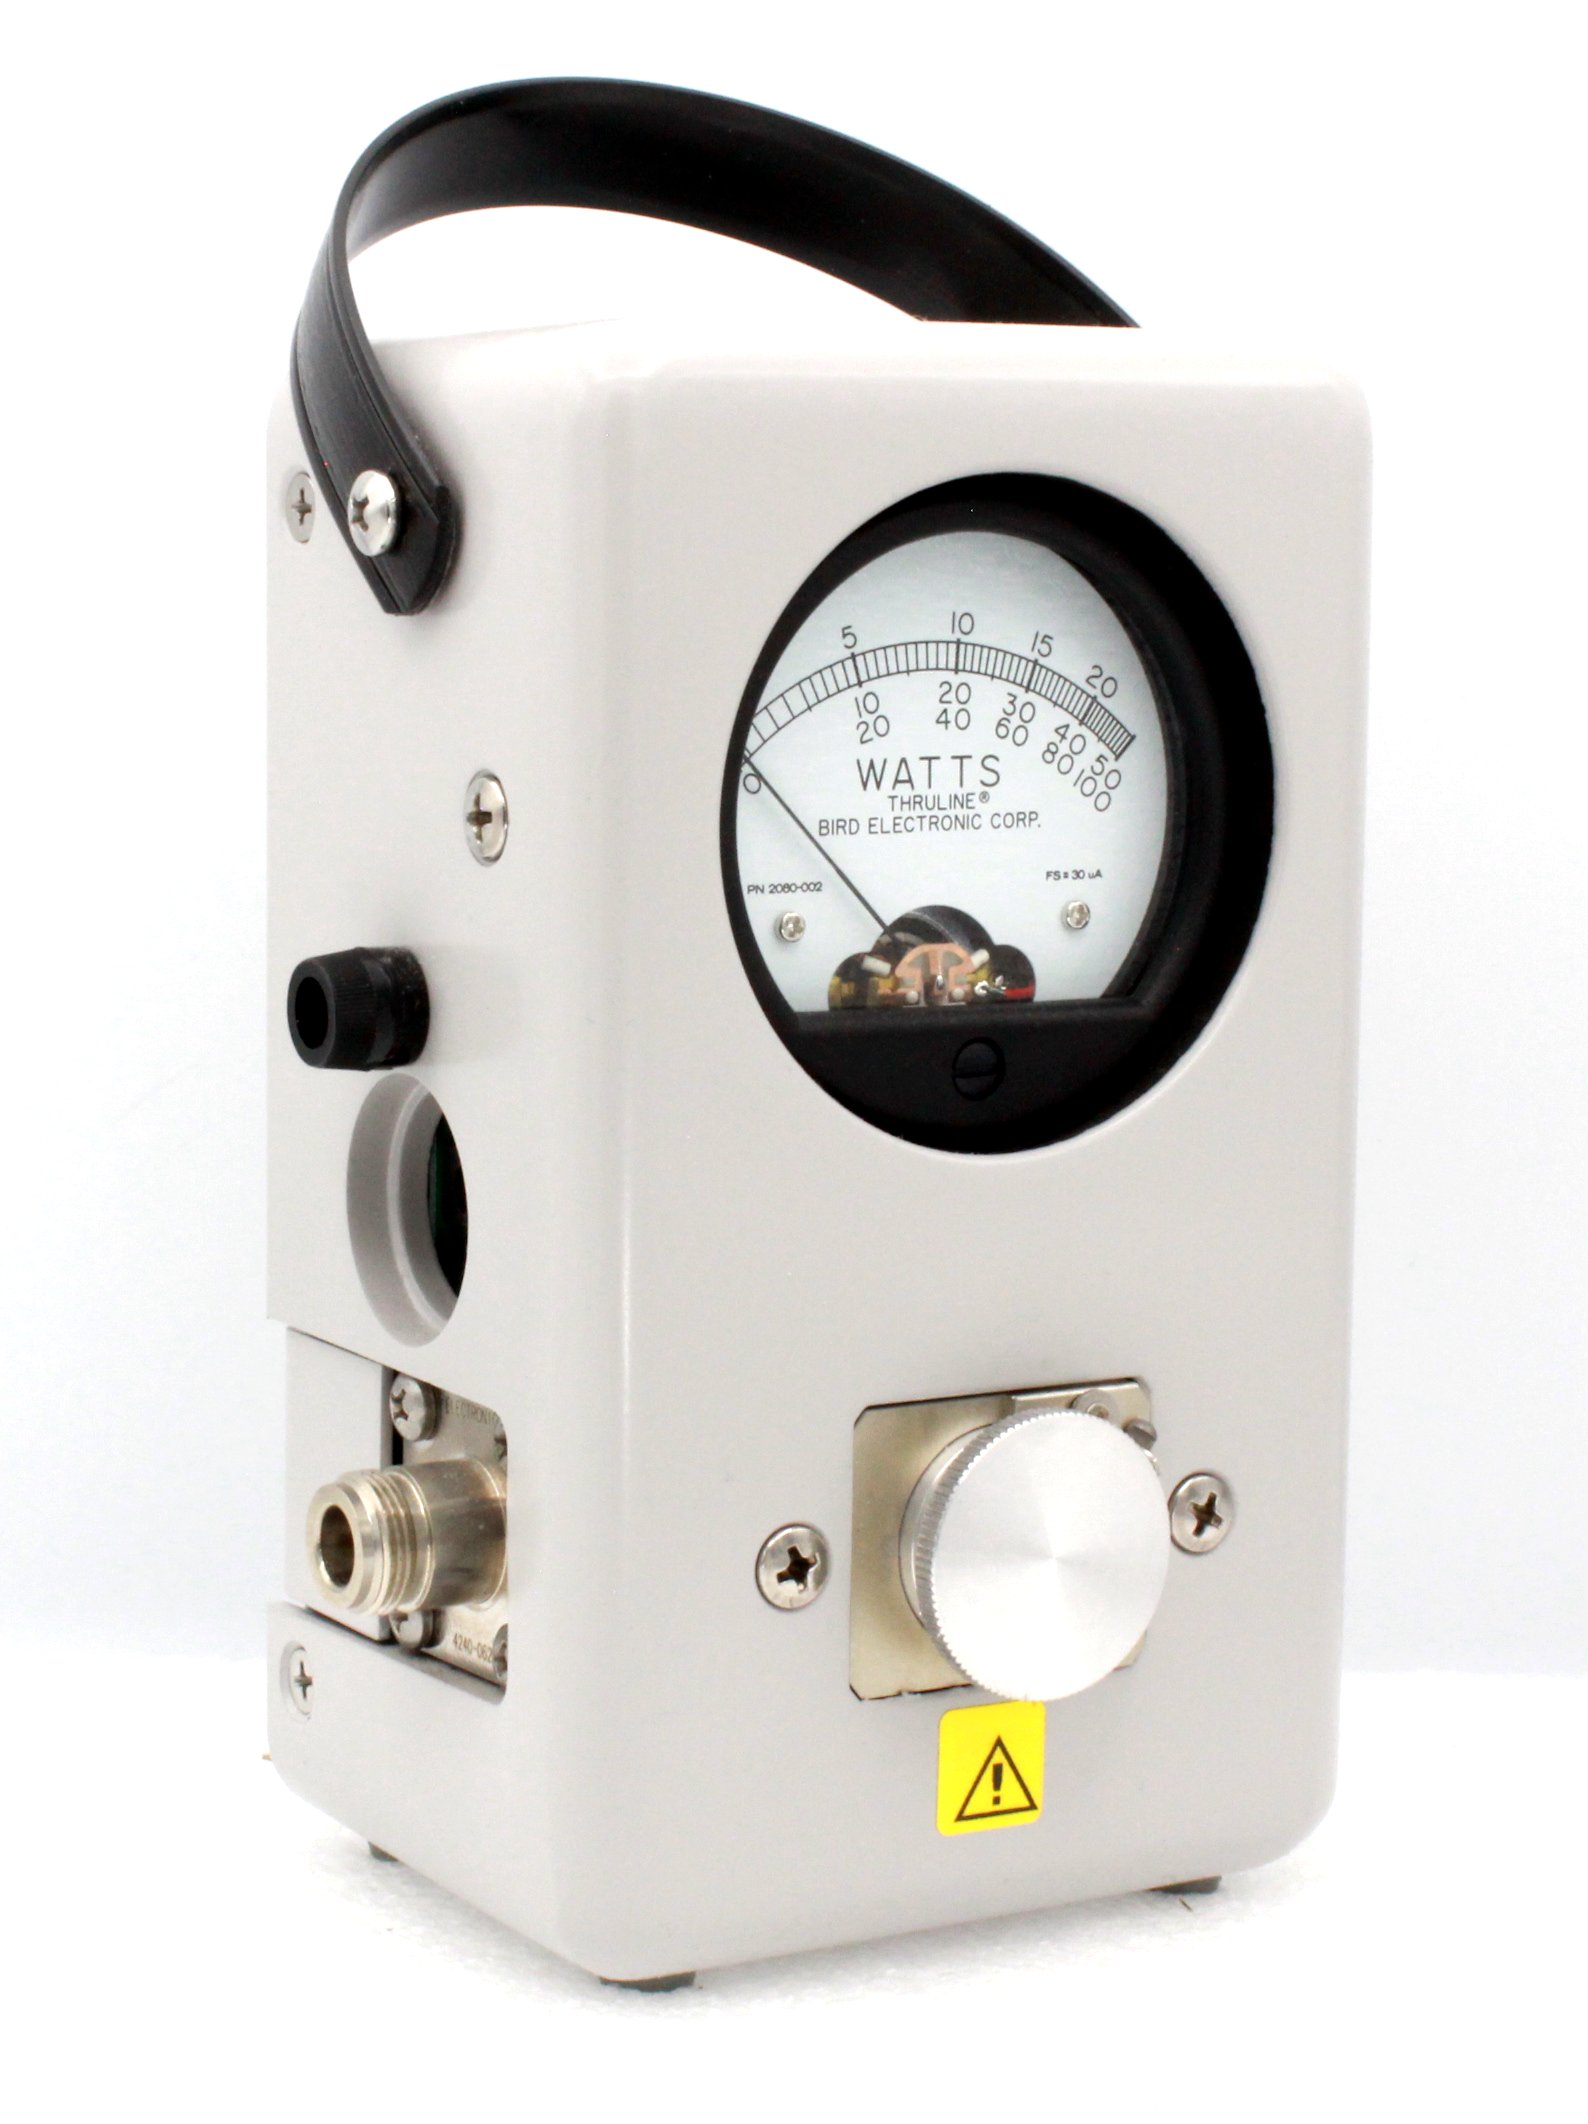 Bird 43 Peak/Average Thruline RF Wattmeter (Demo Unit) In New Condition #223806427 Bird 43 Wattmeter Used